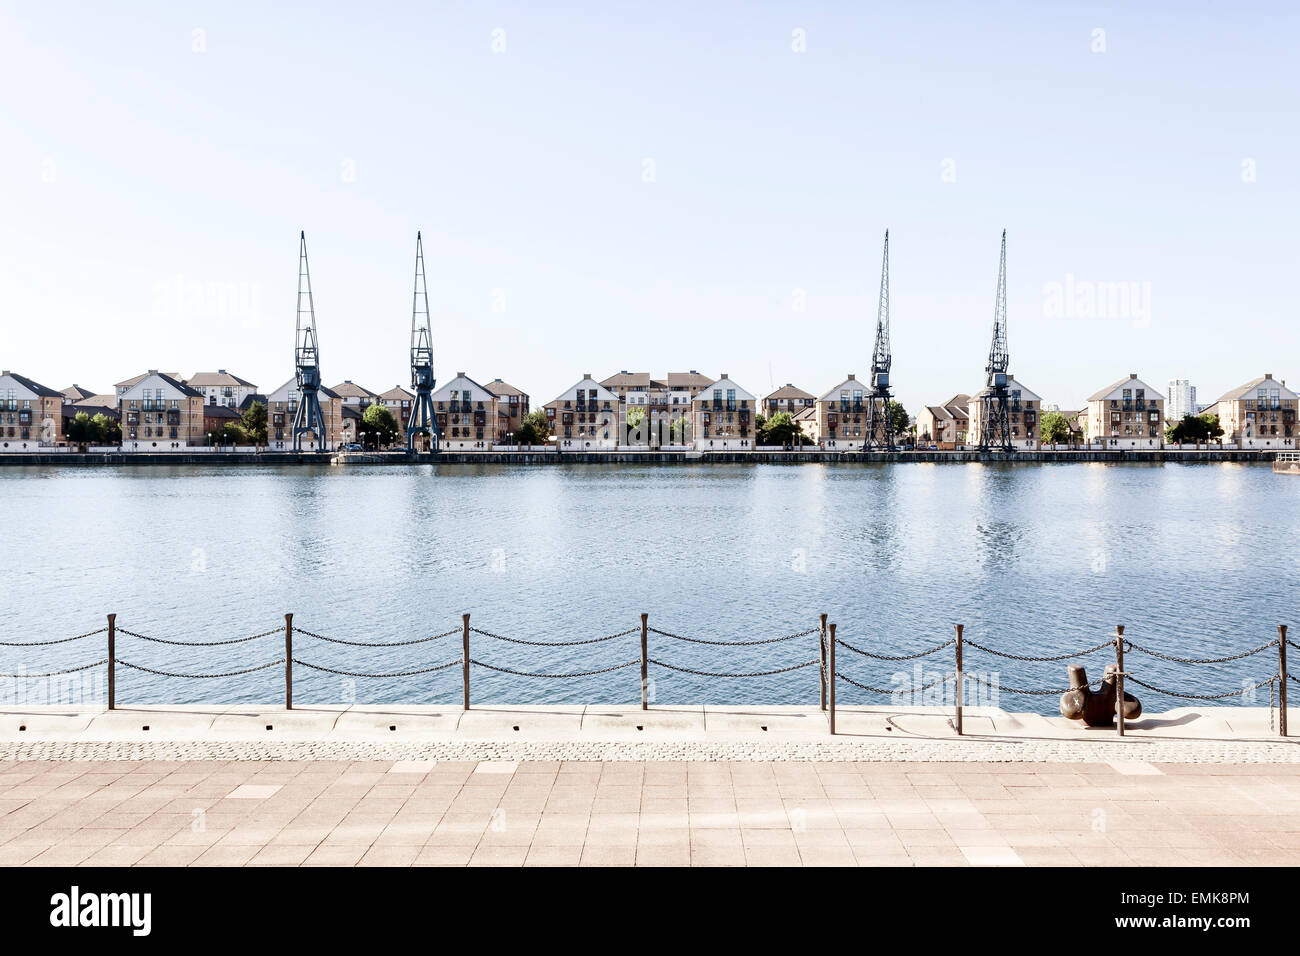 Royal Victoria Dock on the River Thames, London, England, United Kingdom Stock Photo